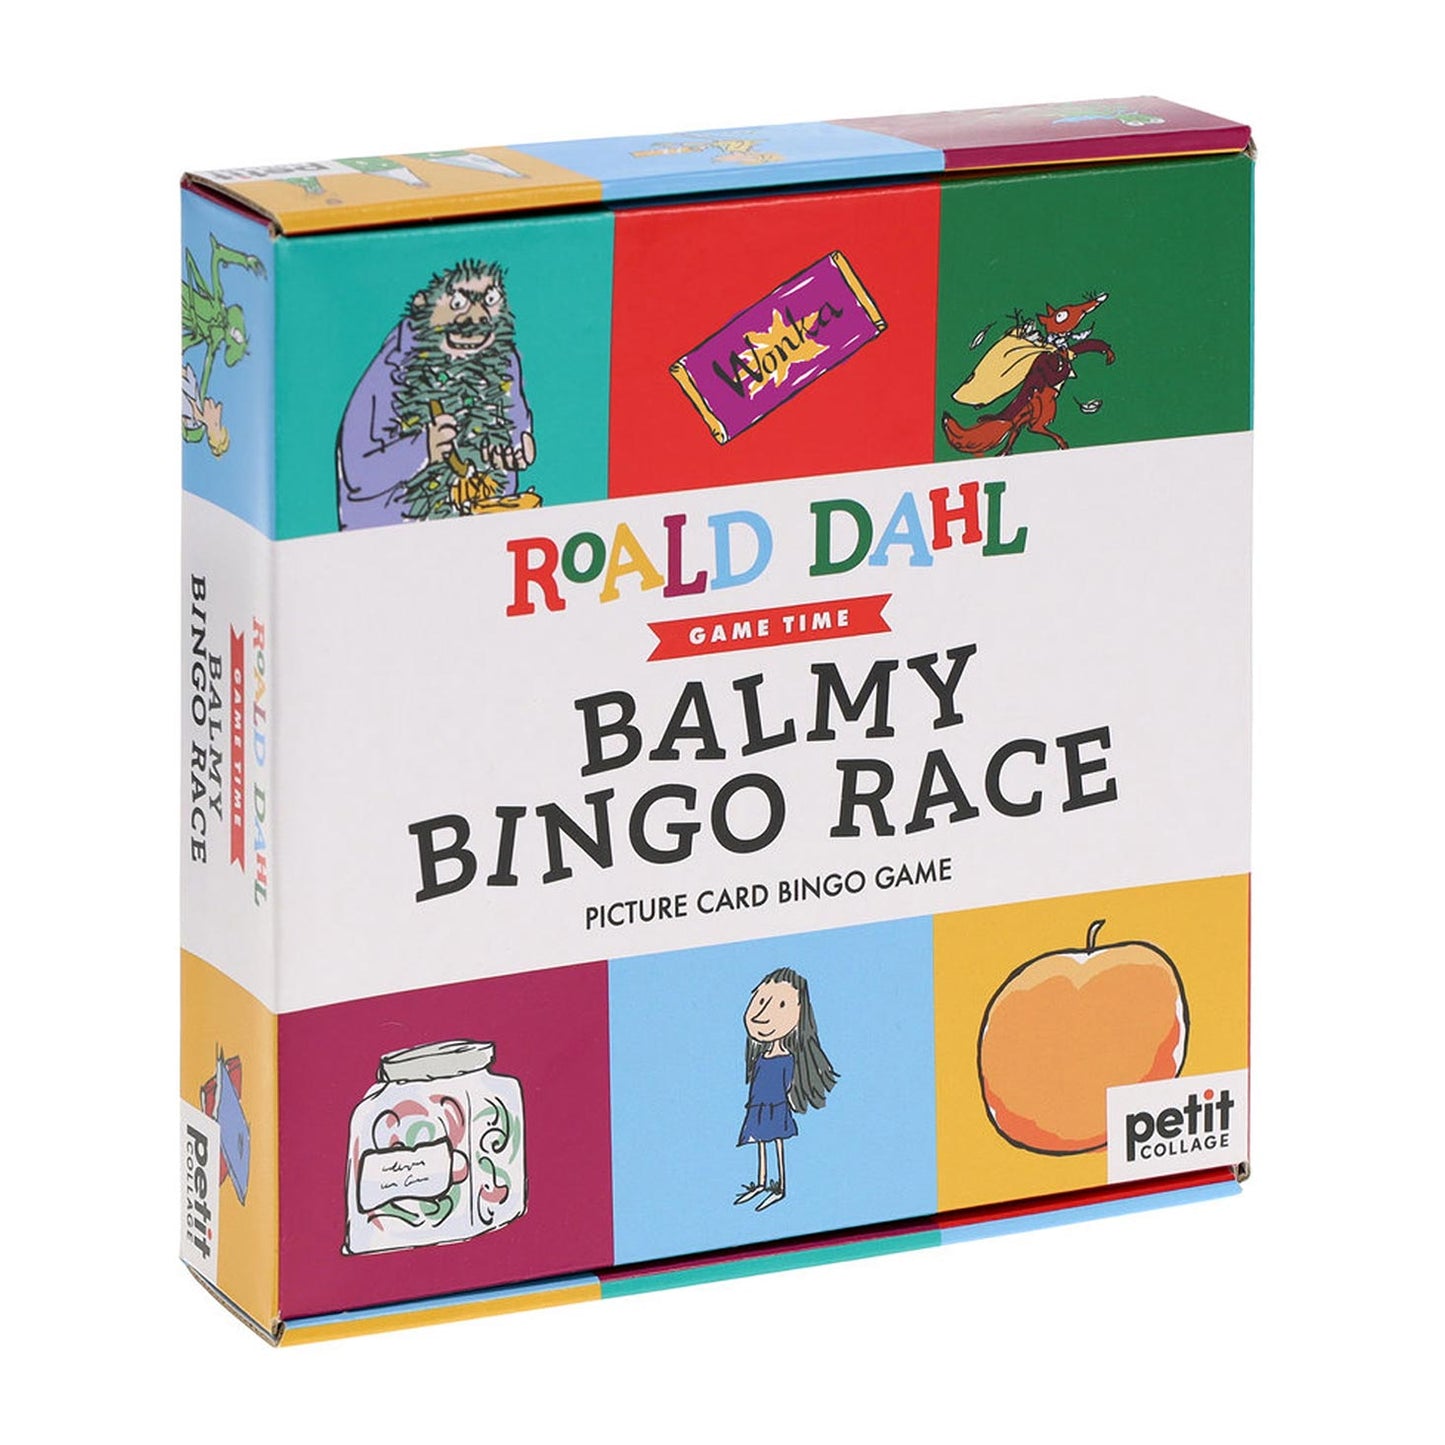 Balmy Bingo Race game, from Roald Dahl and Quentin Blake